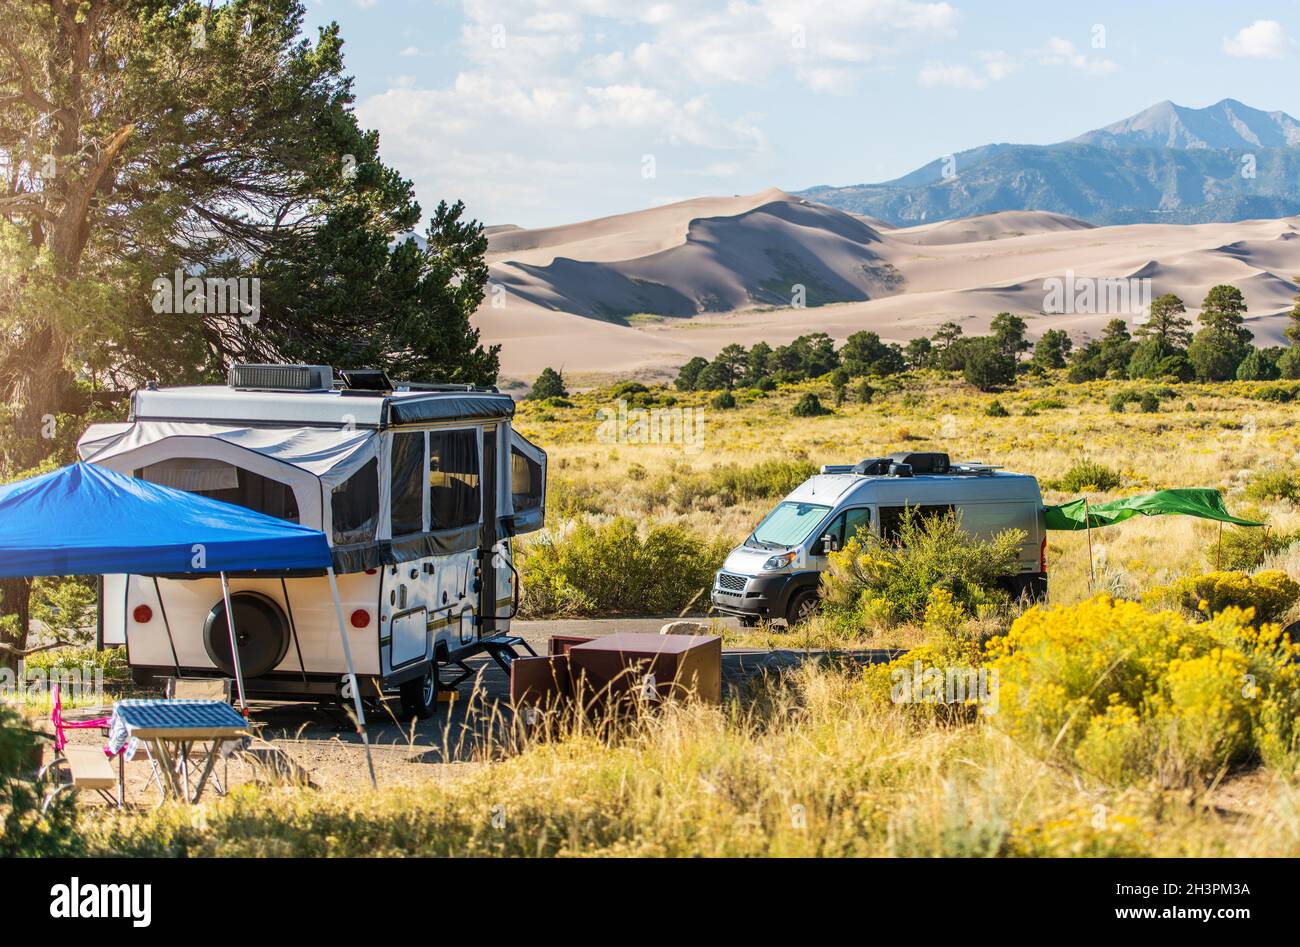 American National Parks Travel. RV Camping in Colorado Great Sand Dunes, Vereinigte Staaten von Amerika. Stockfoto